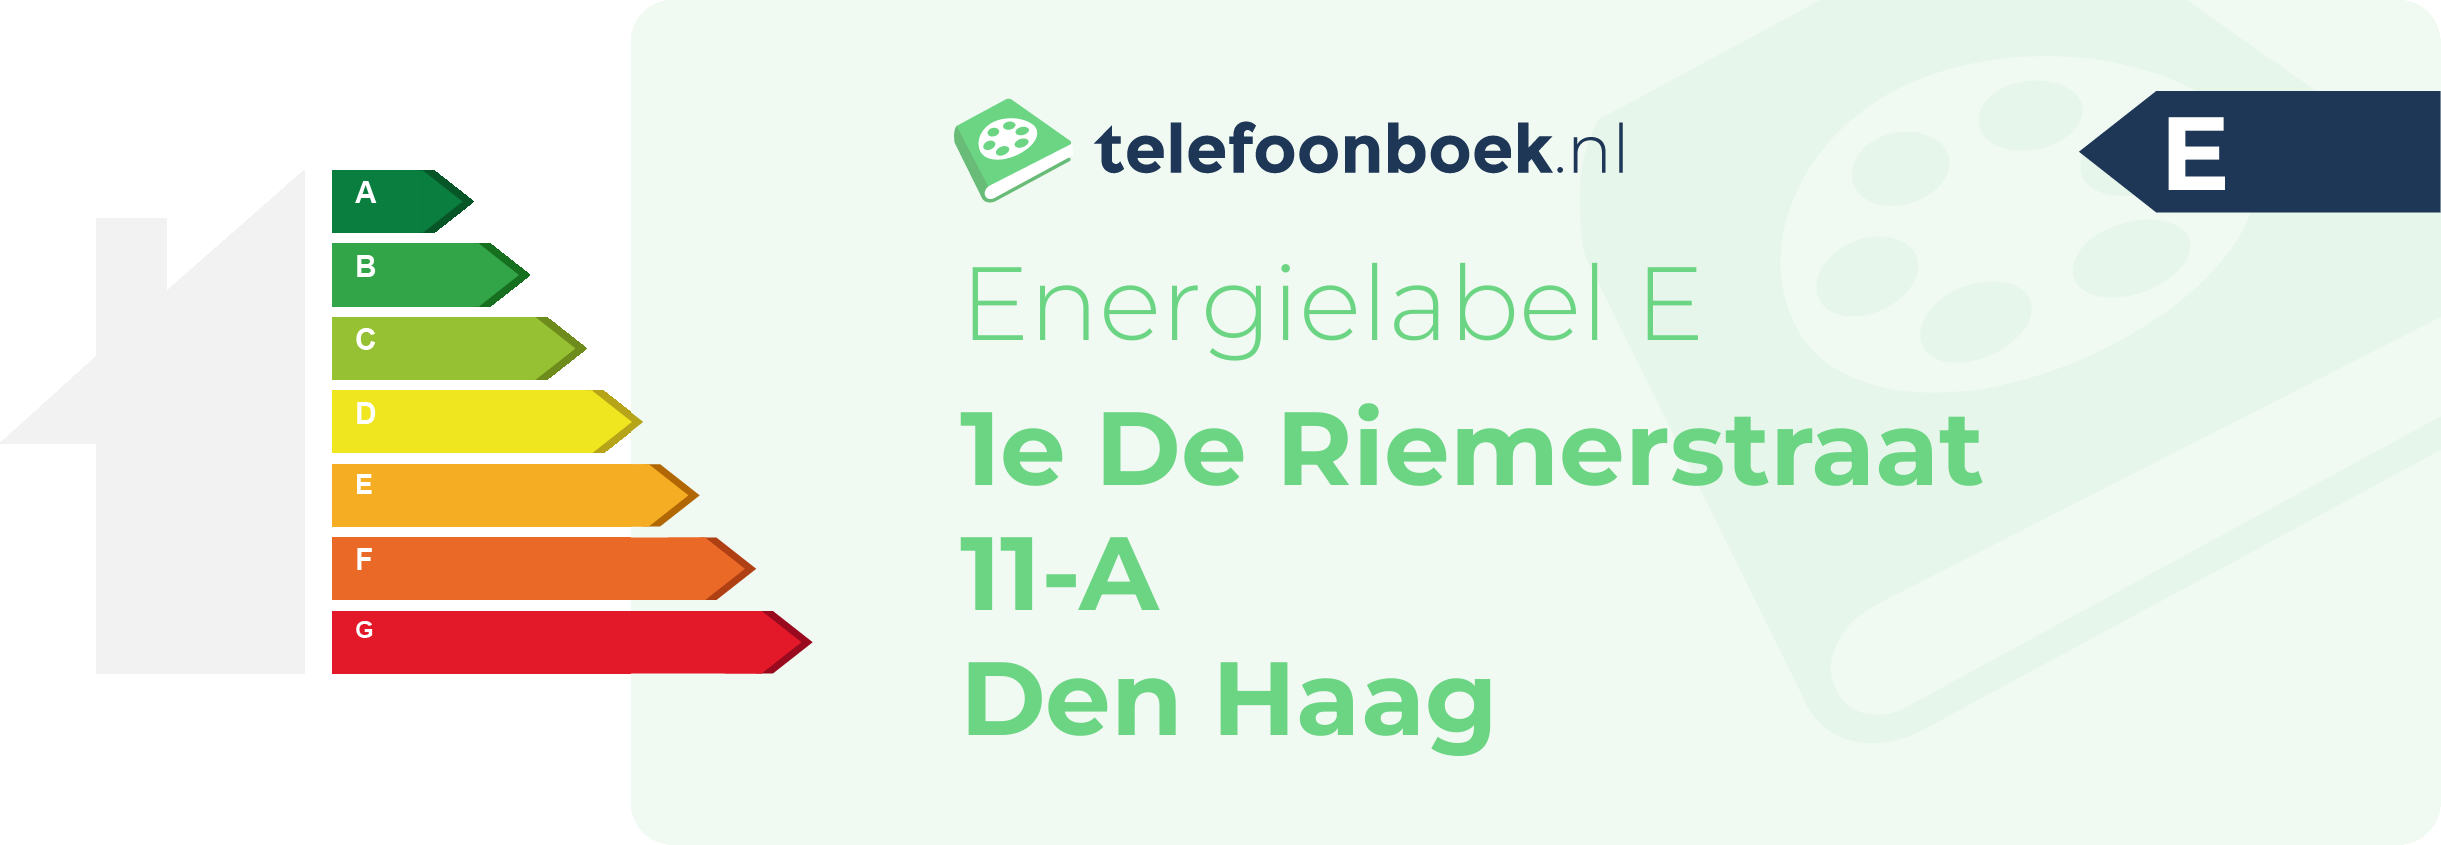 Energielabel 1e De Riemerstraat 11-A Den Haag